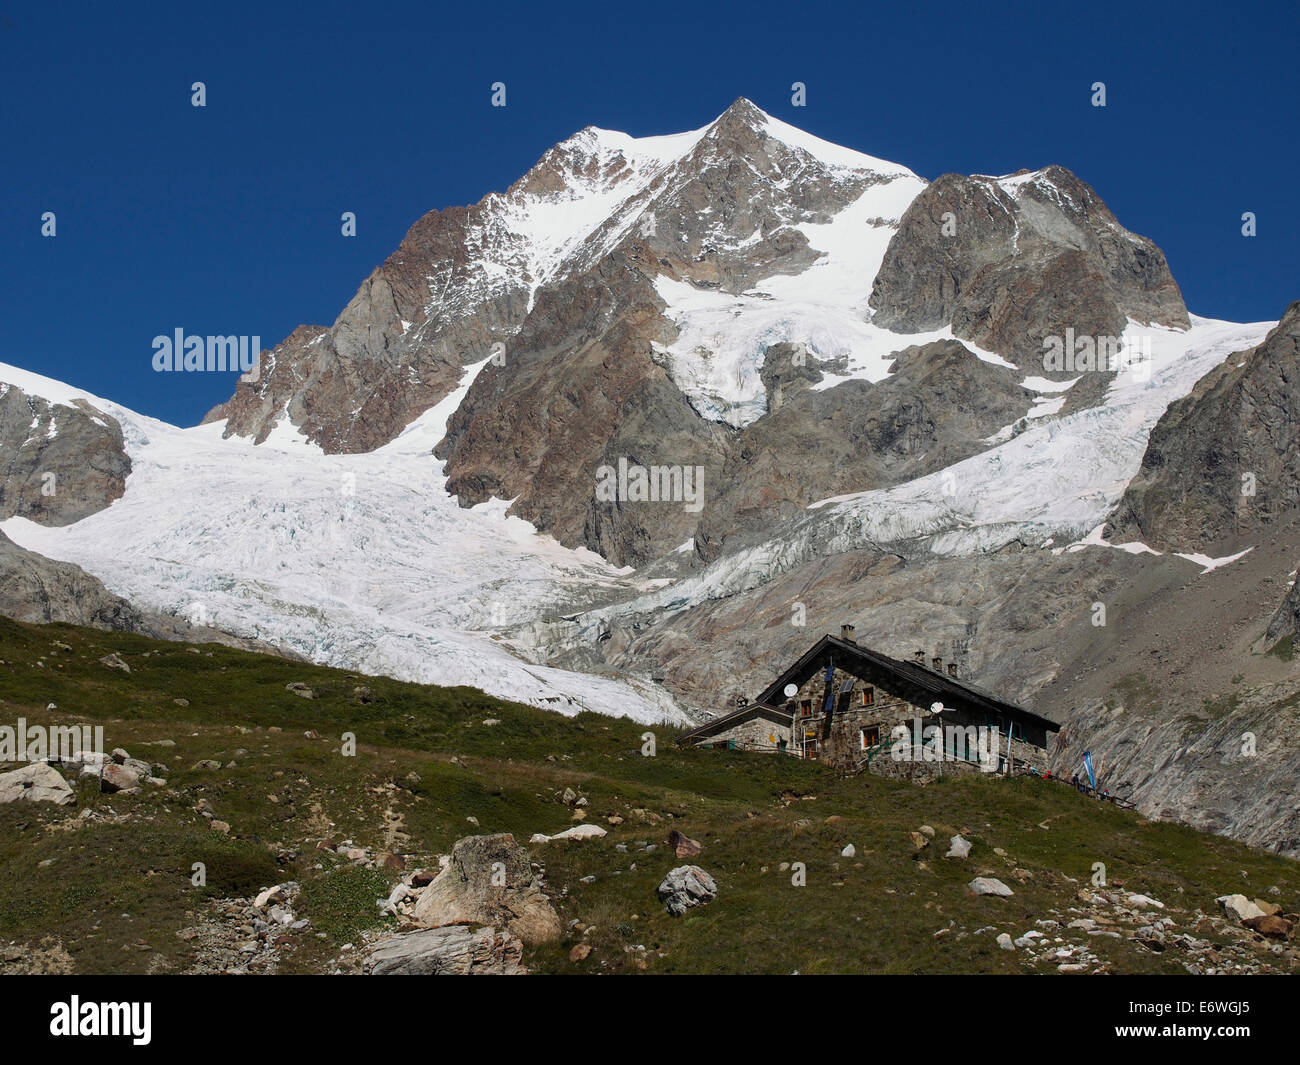 Refuge Elisabetta with Aiguille des glaciers behind, Italian Alps Stock Photo